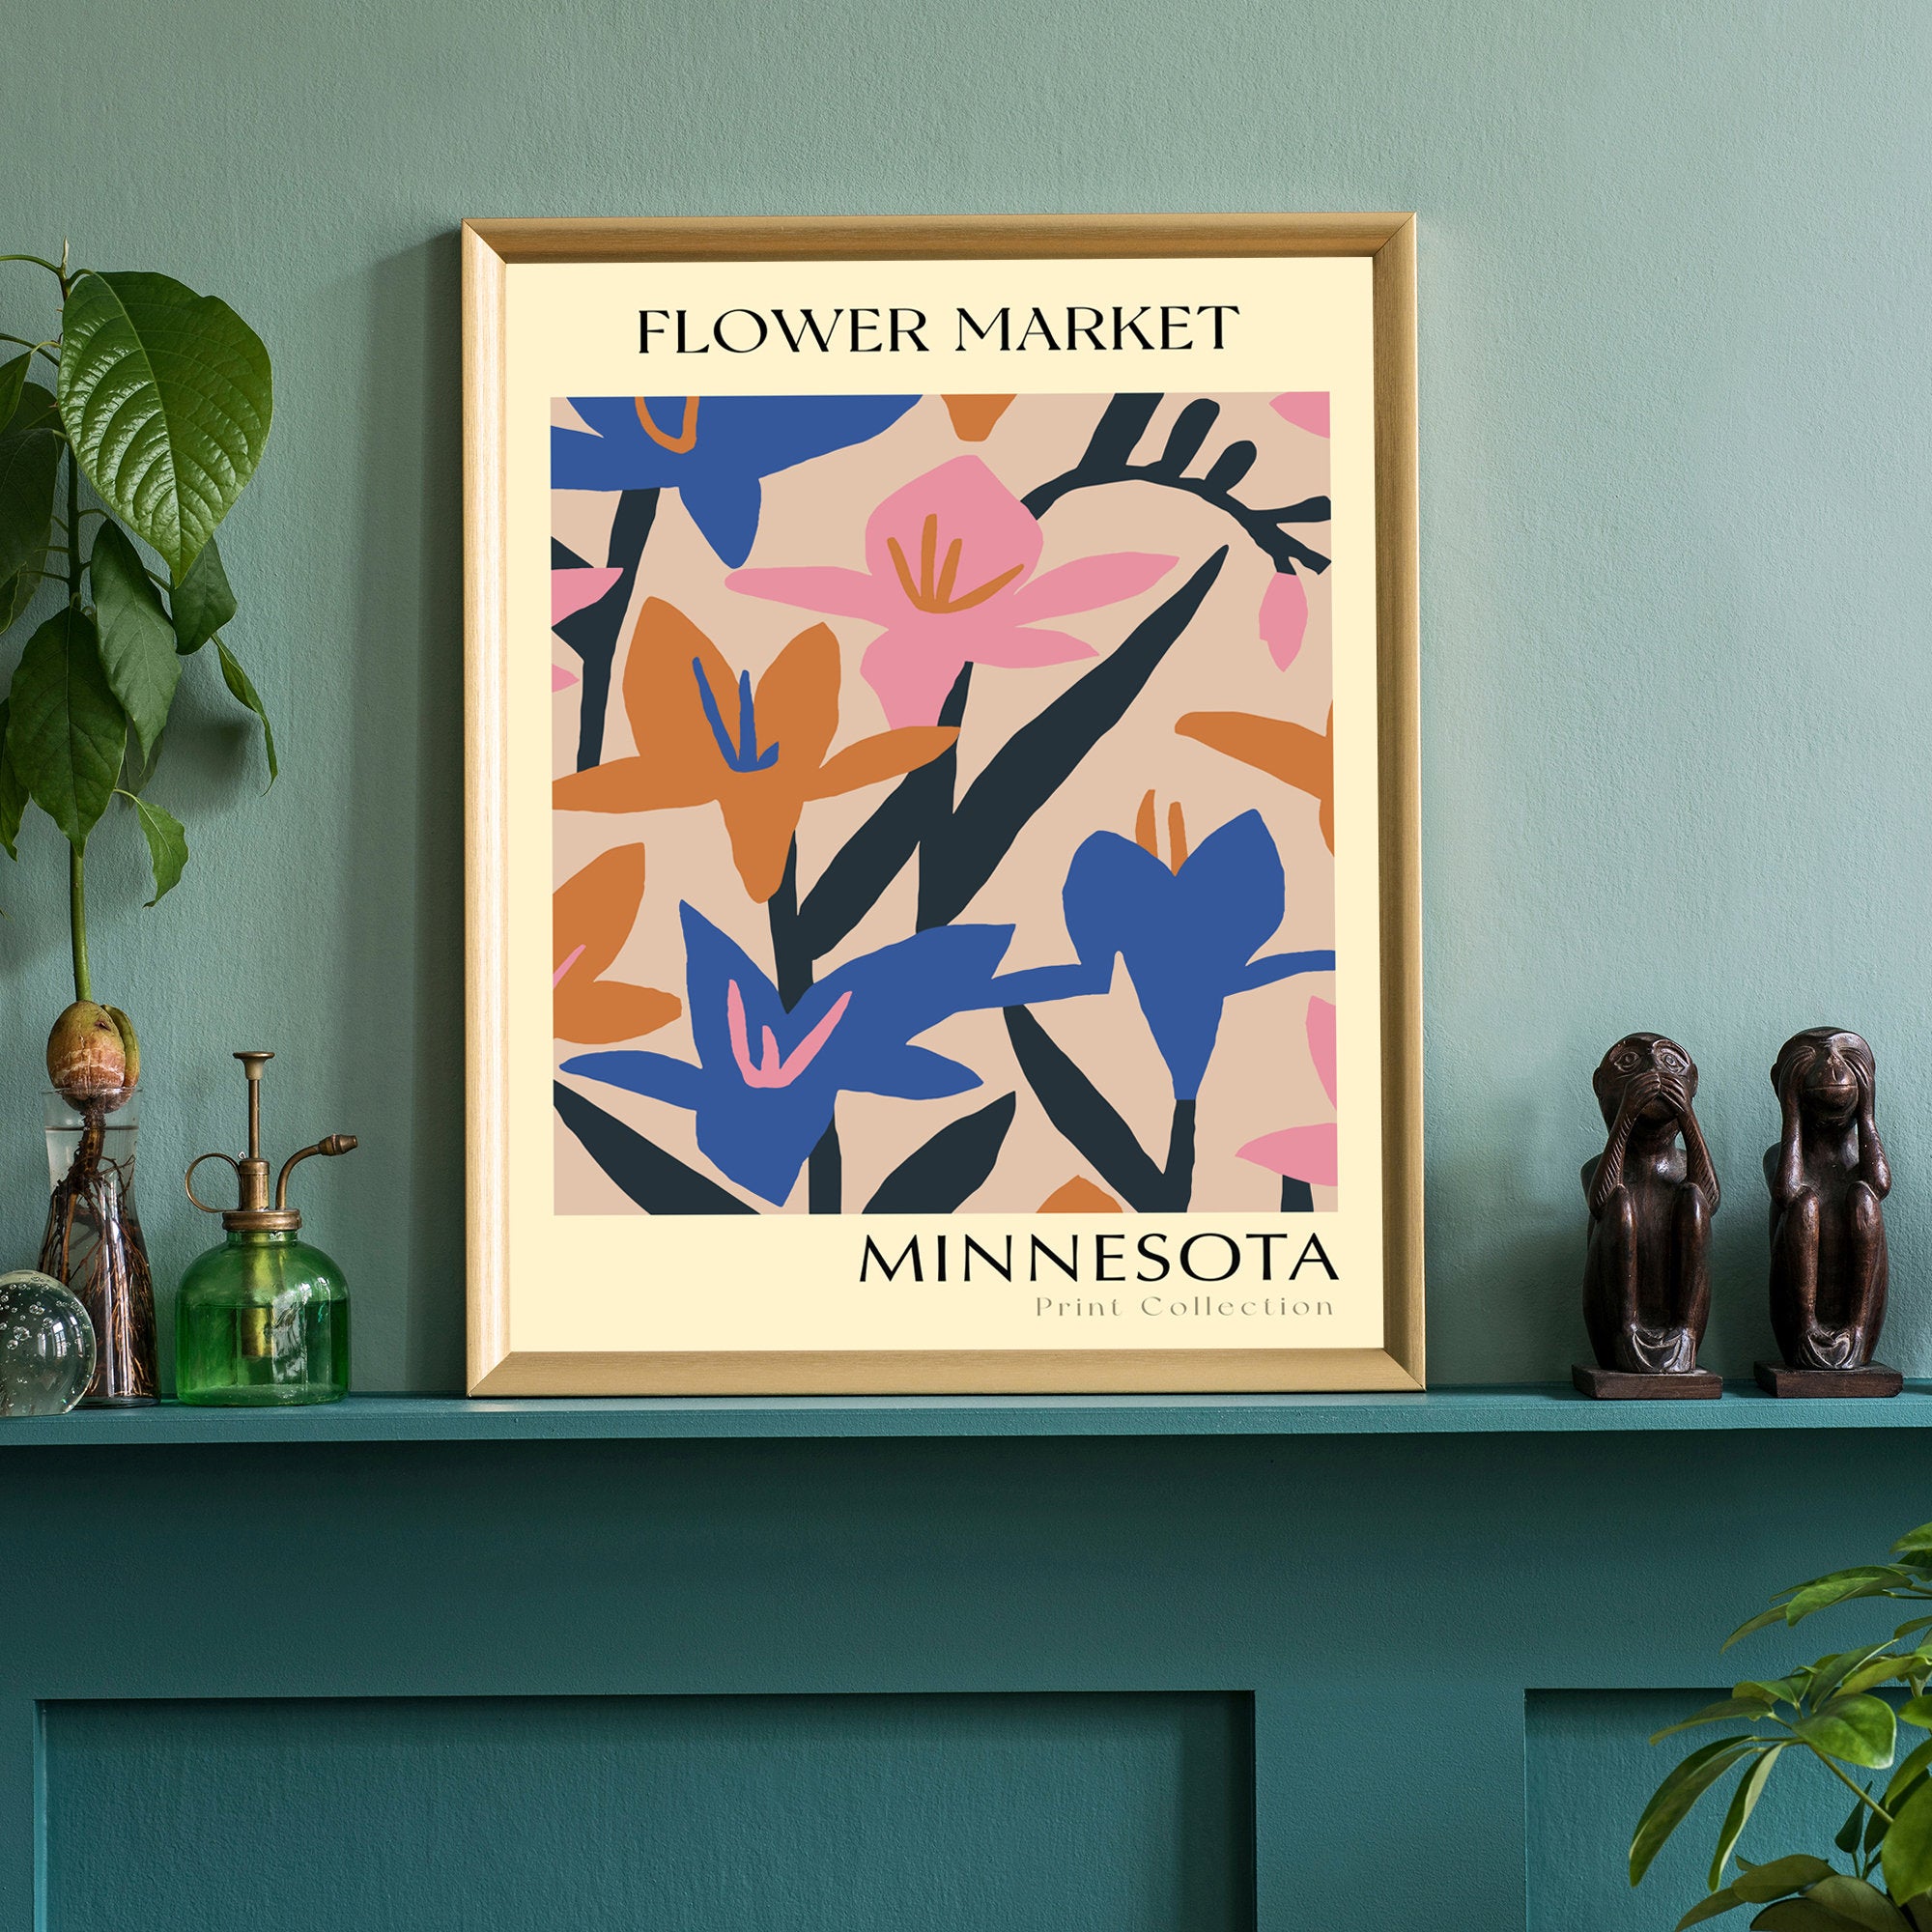 Minnesota State flower print, USA states poster, Minnesota flower market poster, Botanical posters, Nature poster artwork, Boho floral art